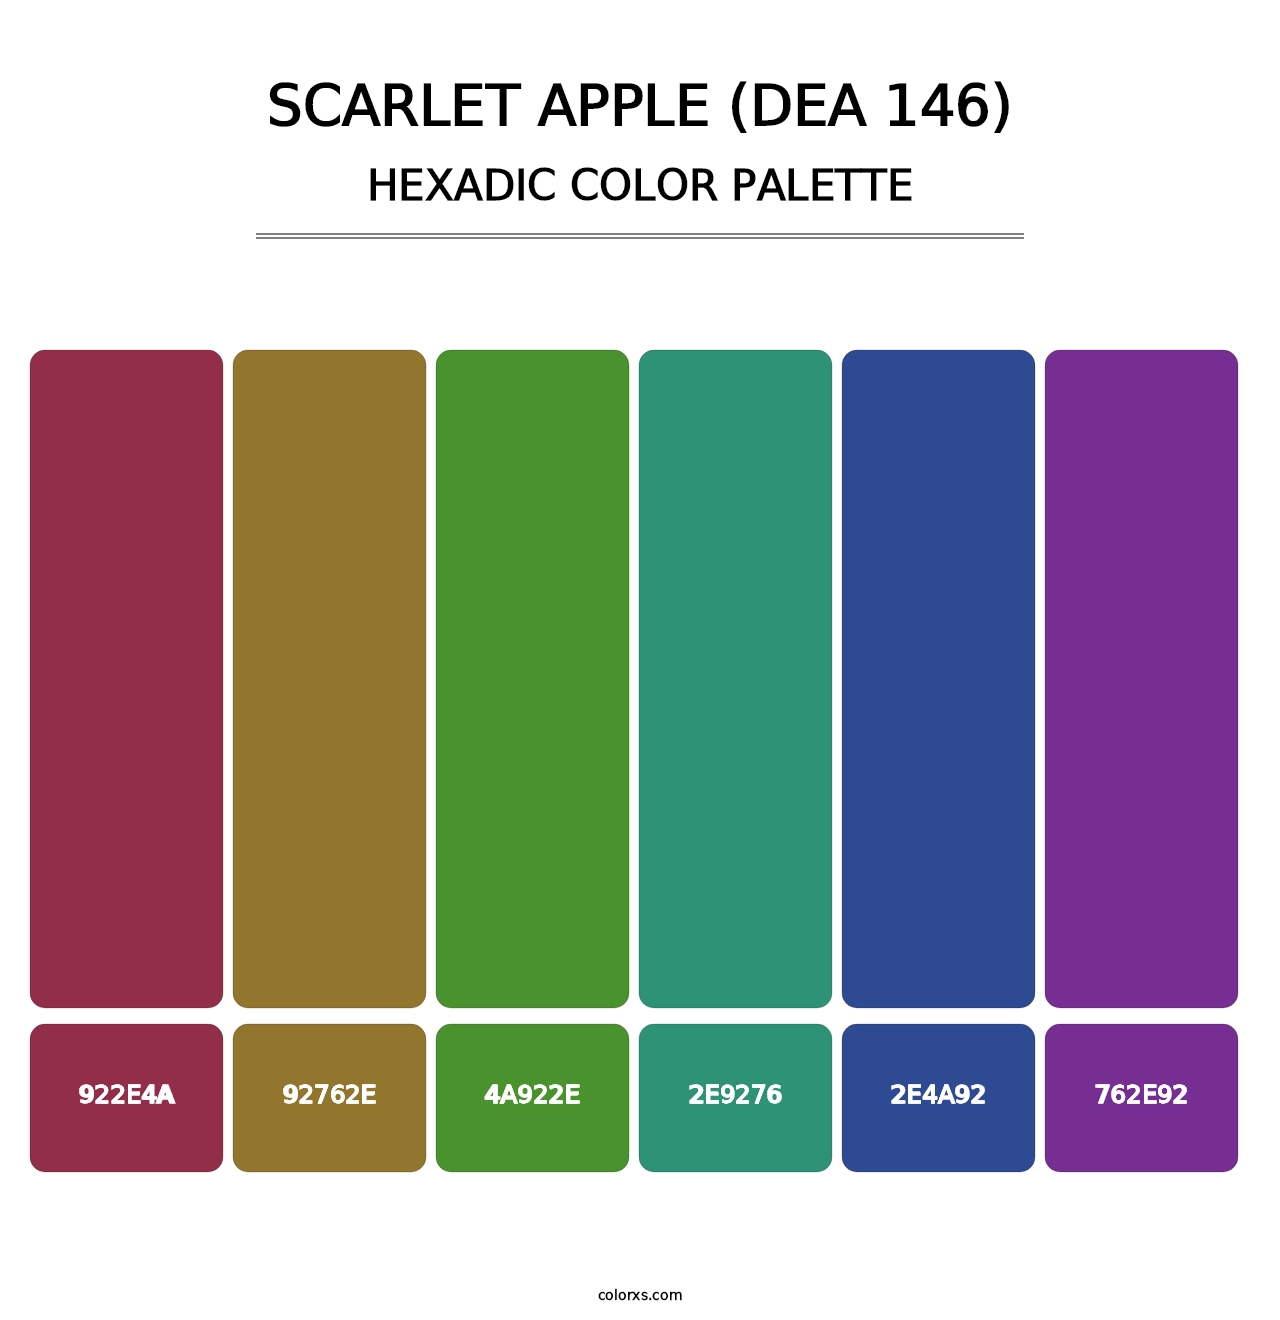 Scarlet Apple (DEA 146) - Hexadic Color Palette